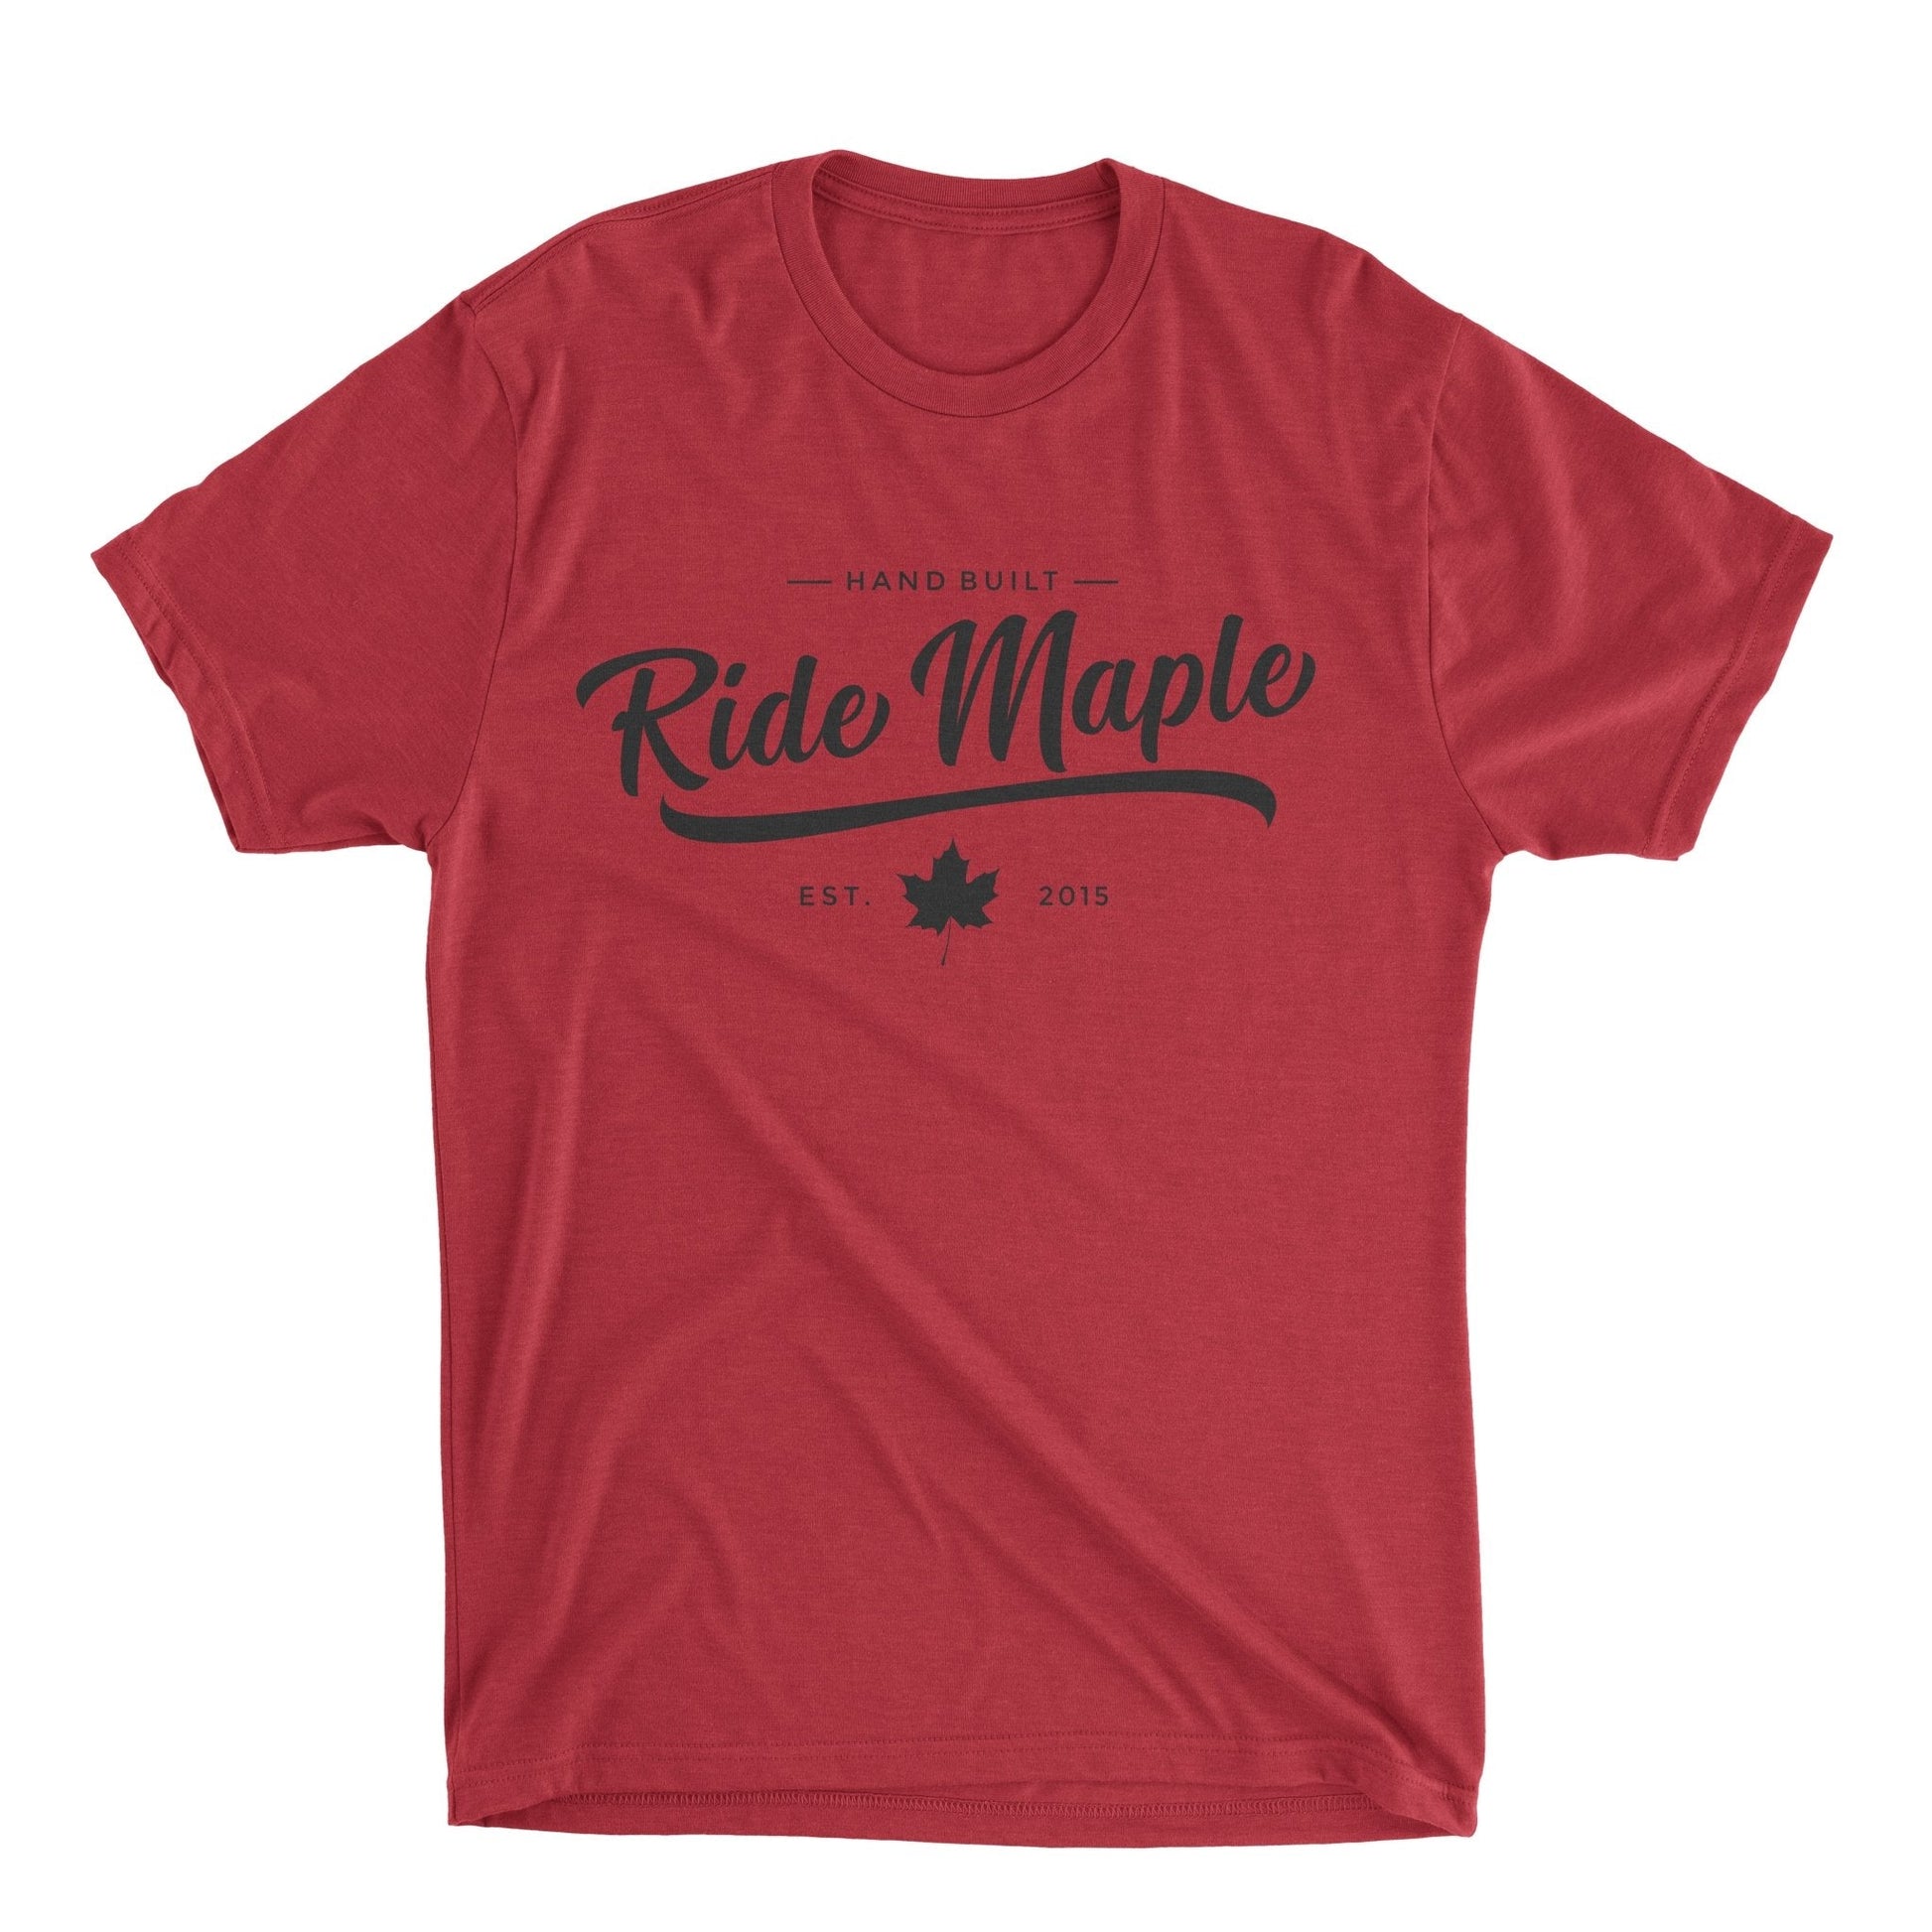 Ride Maple Classy Tee Black Ink - Ride Maple